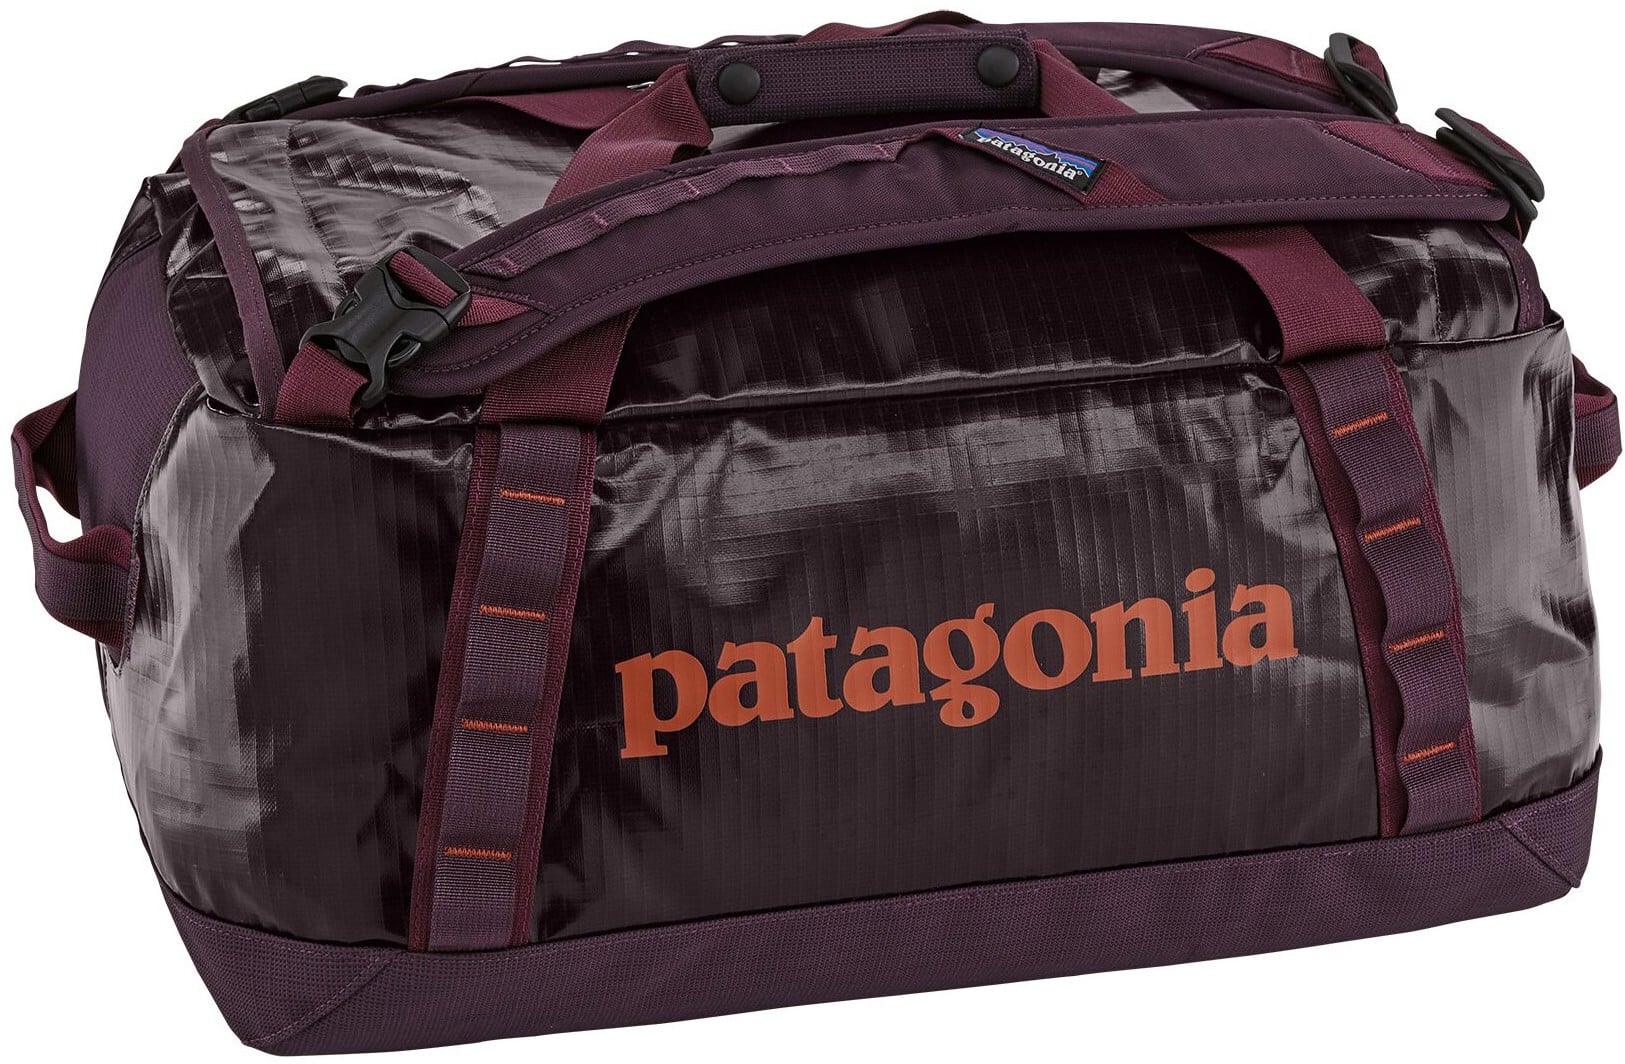 Patagonia Black Hole Duffel 40L Duffle Bag - fitz roy patchwork ...